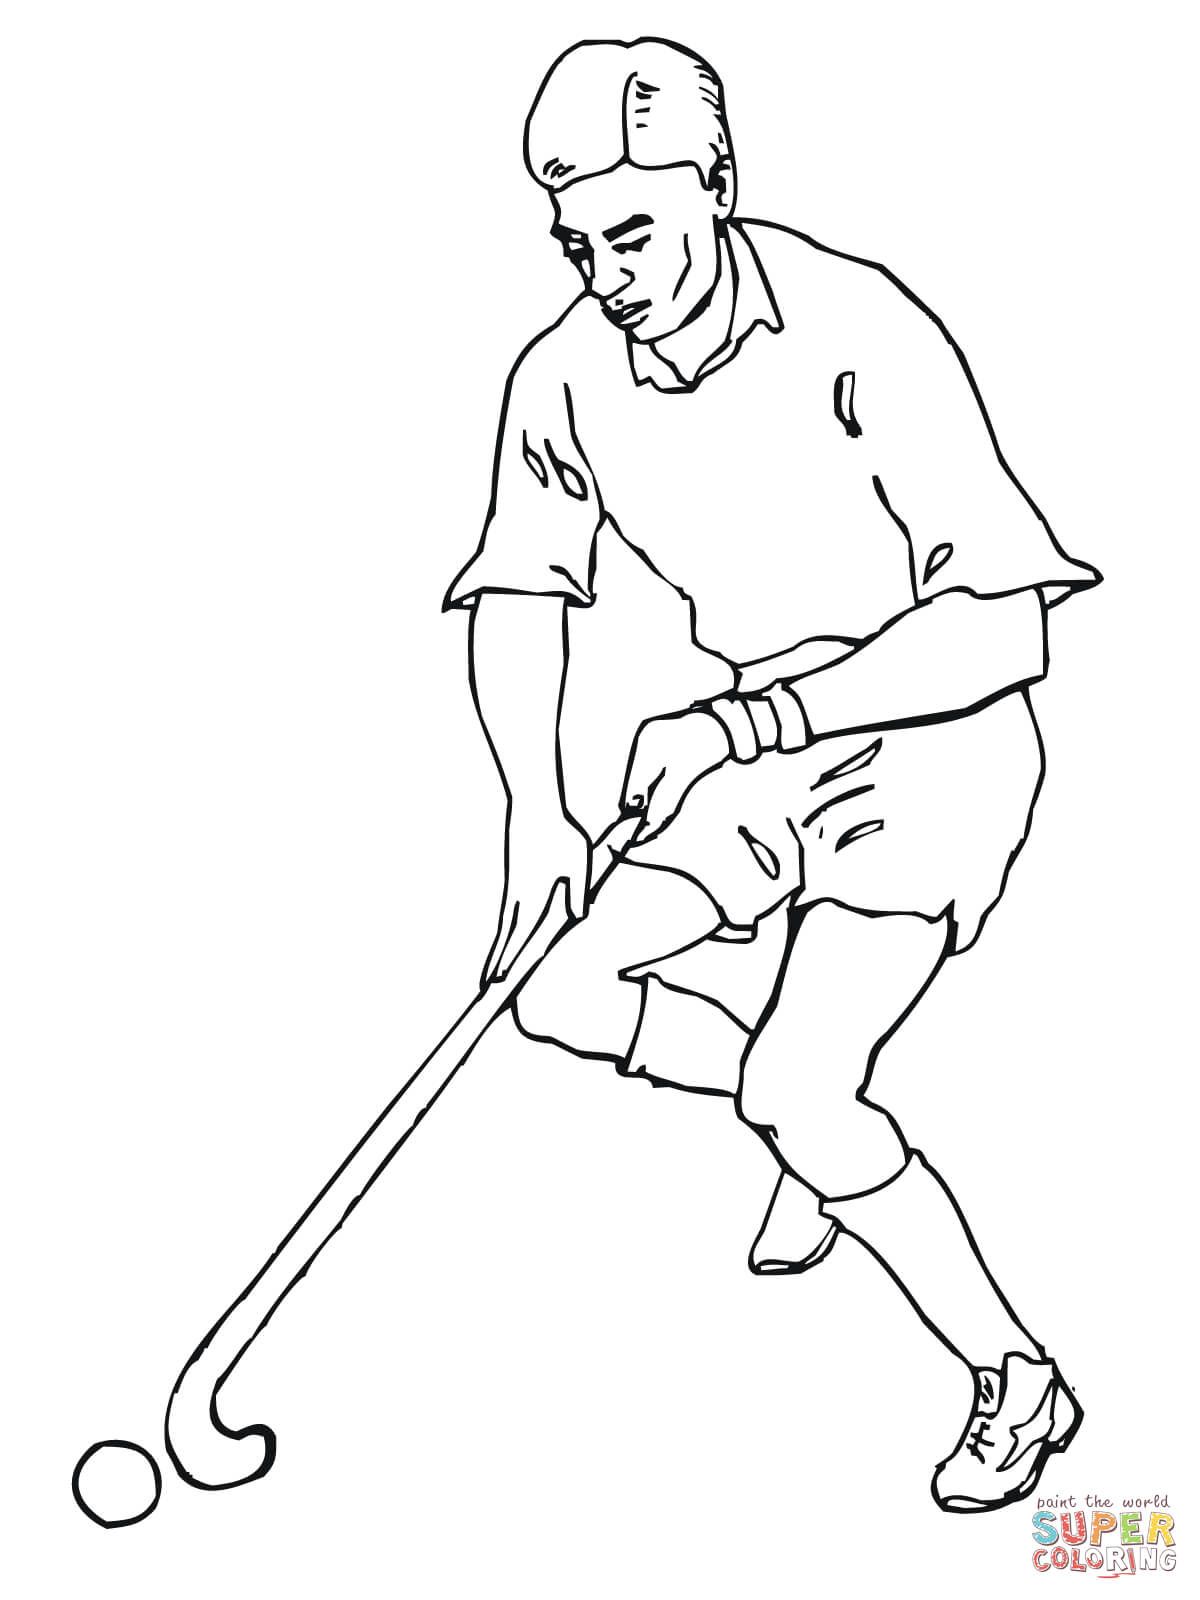 Image #17294 - Coloriage hockey gratuit